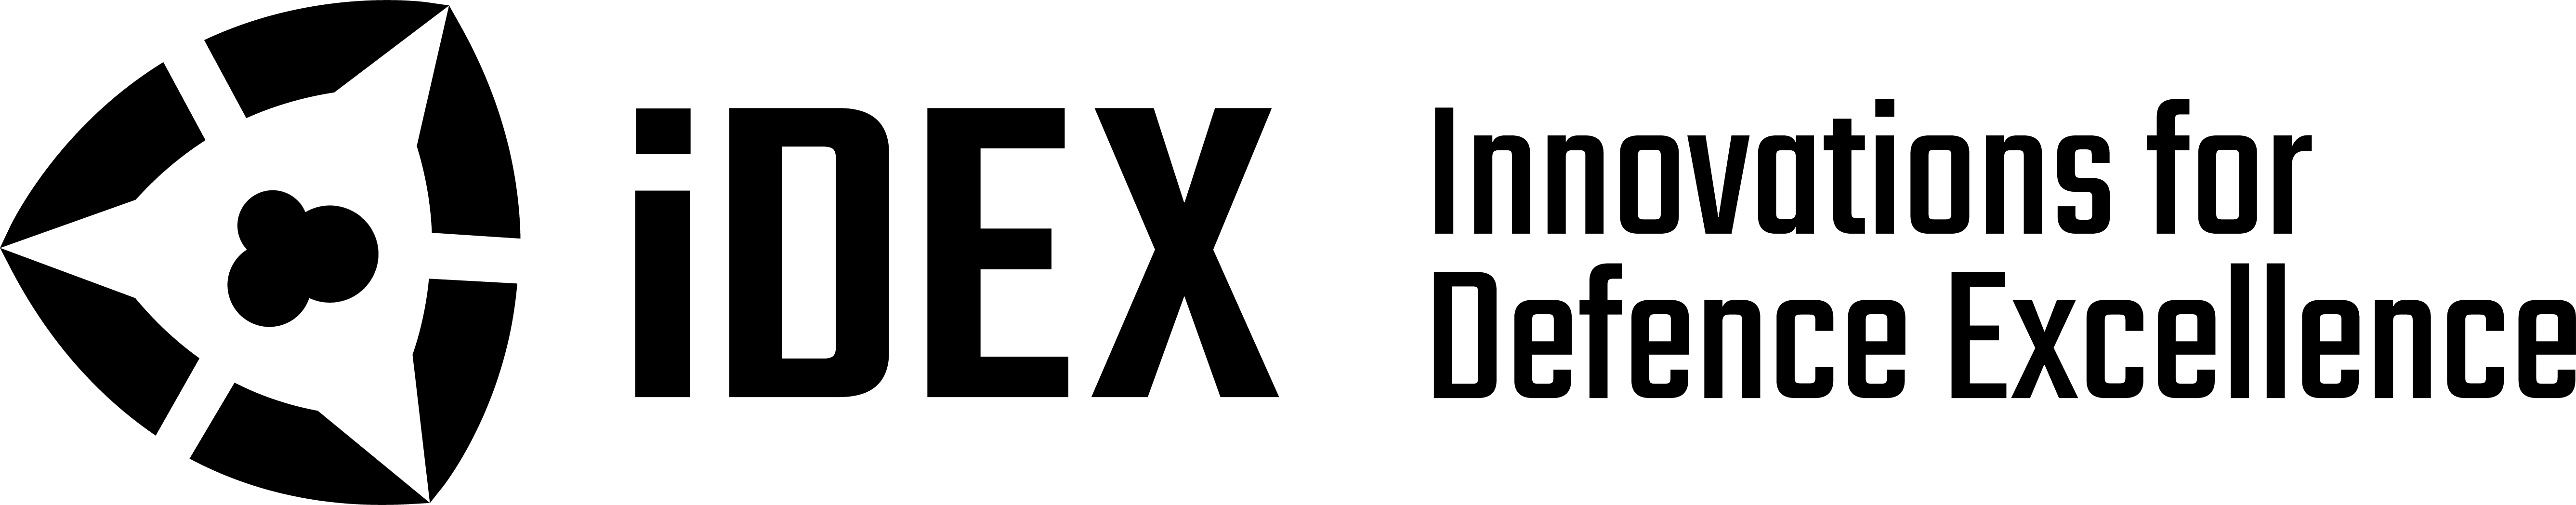 iDEX logo